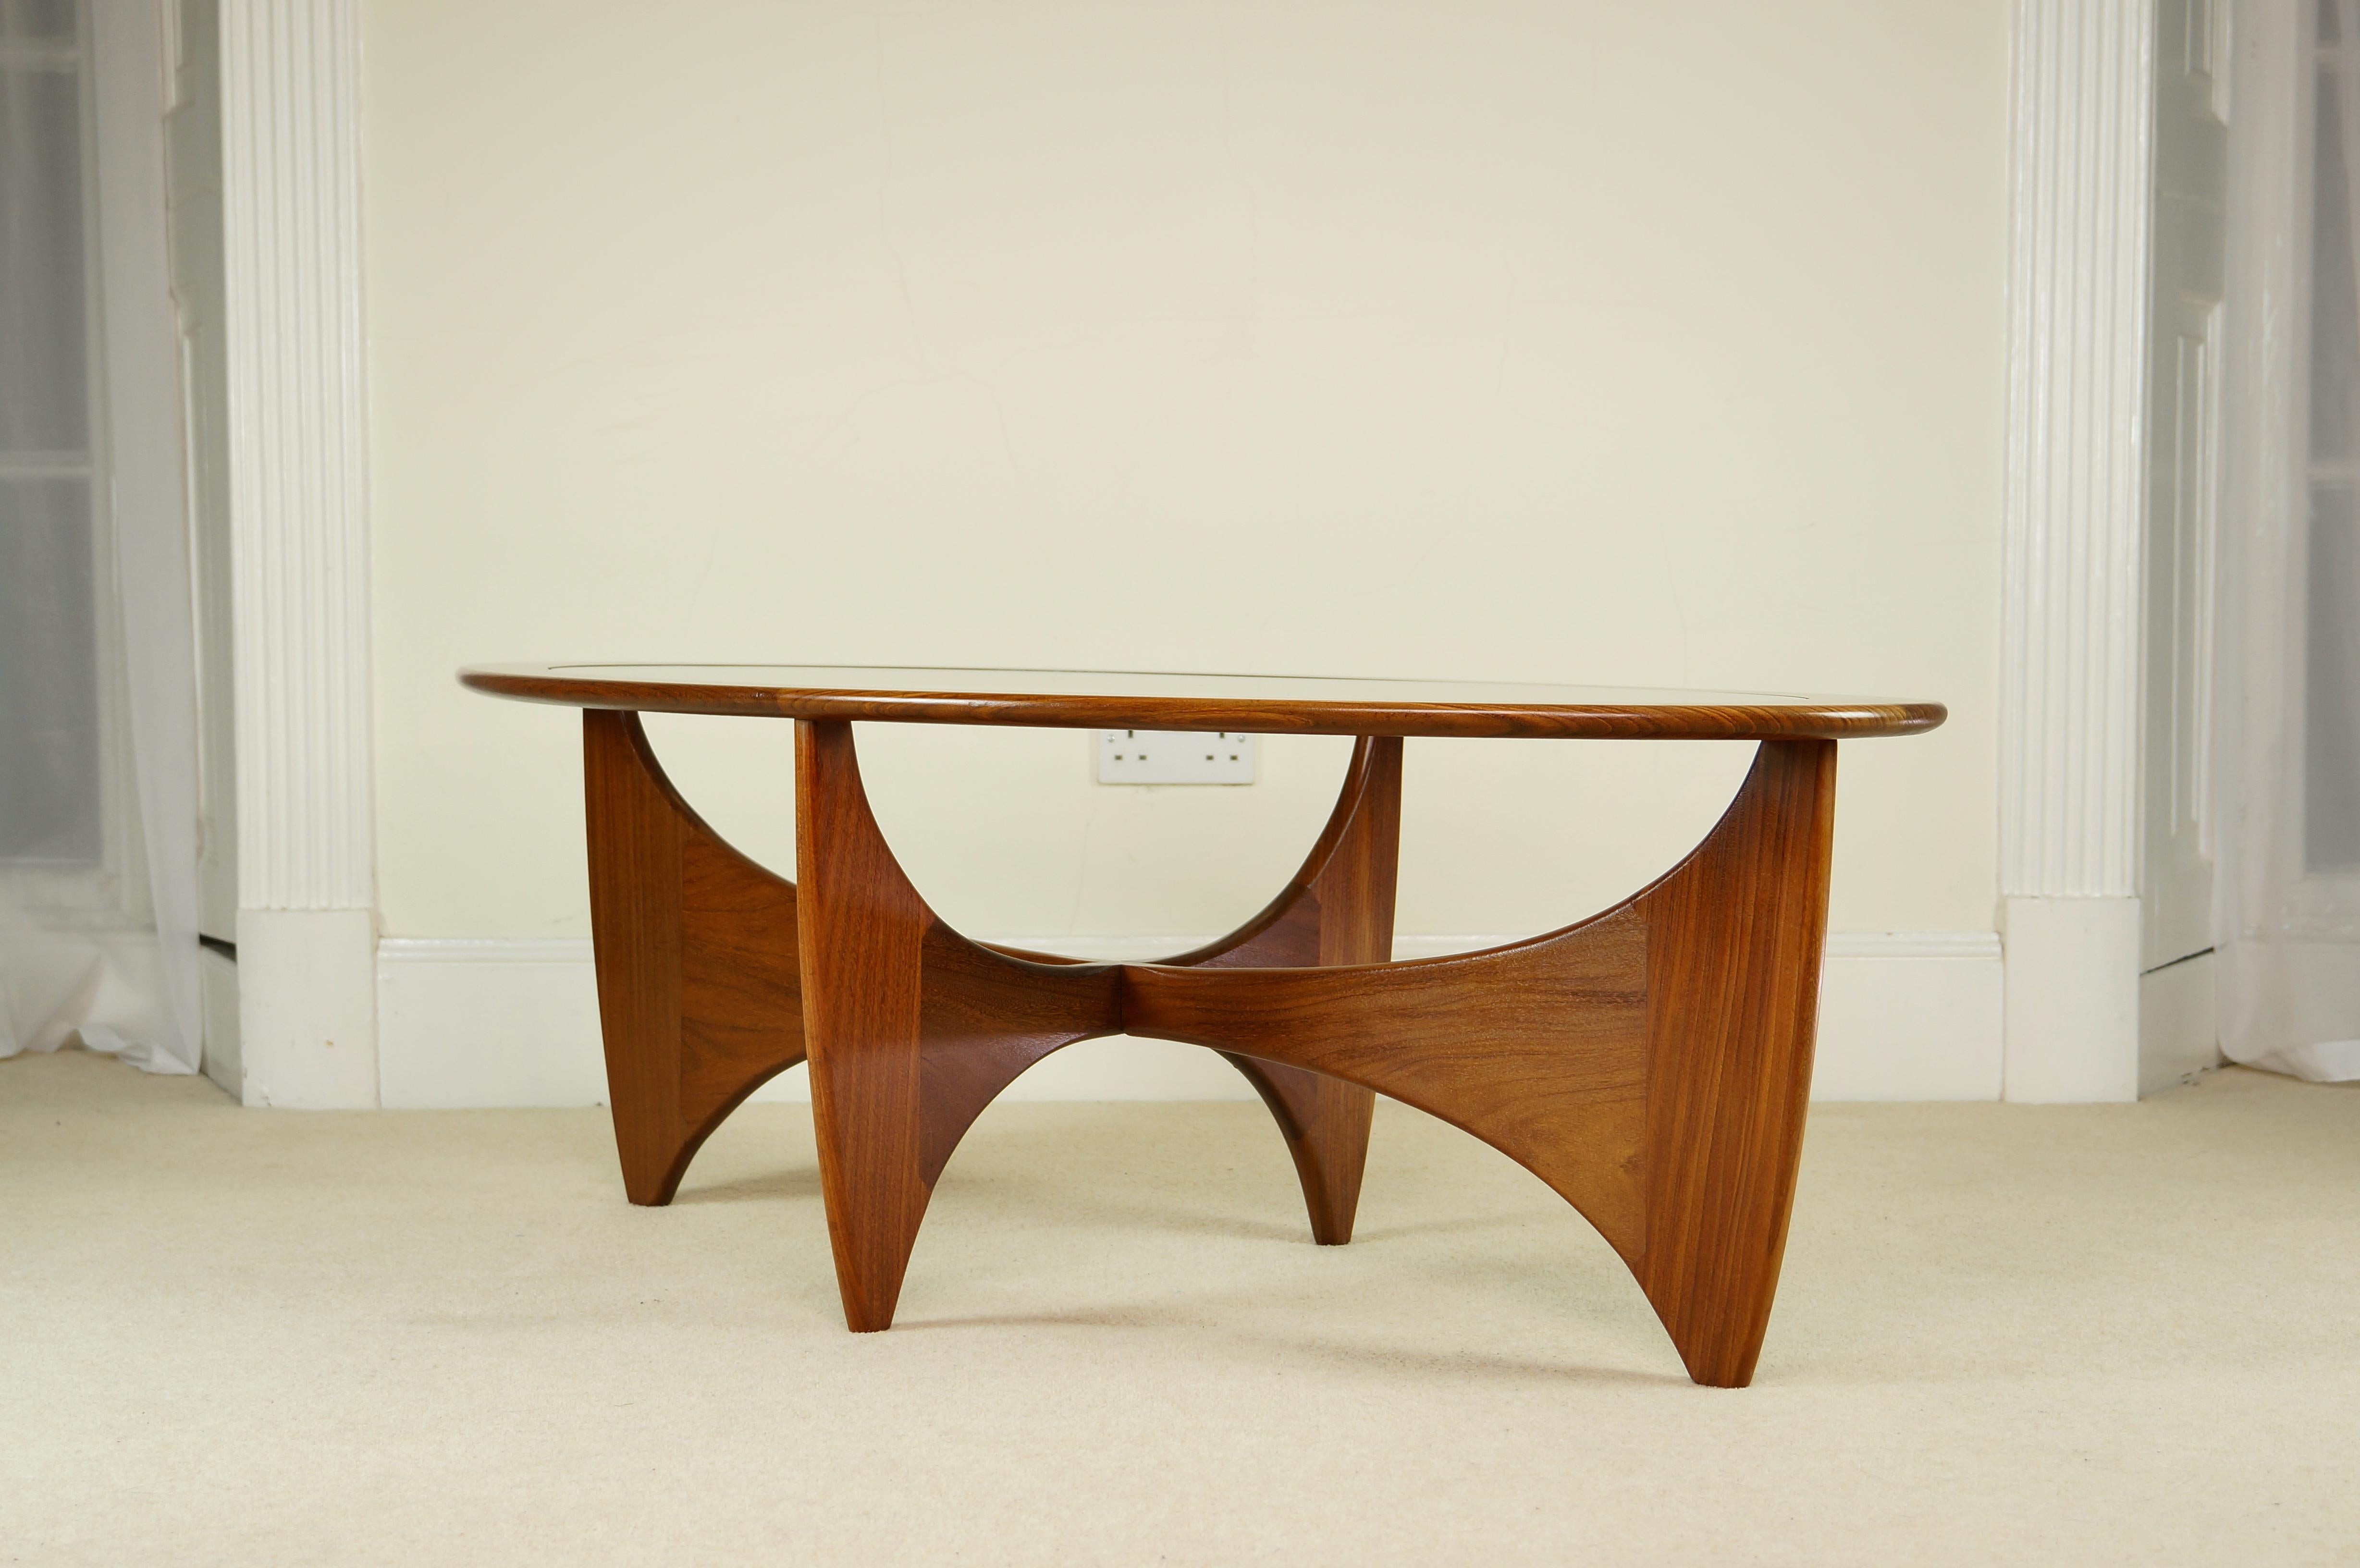 British Vintage G Plan Astro Teak and Glass Oval Coffee Table, Retro 1960s Midcentury